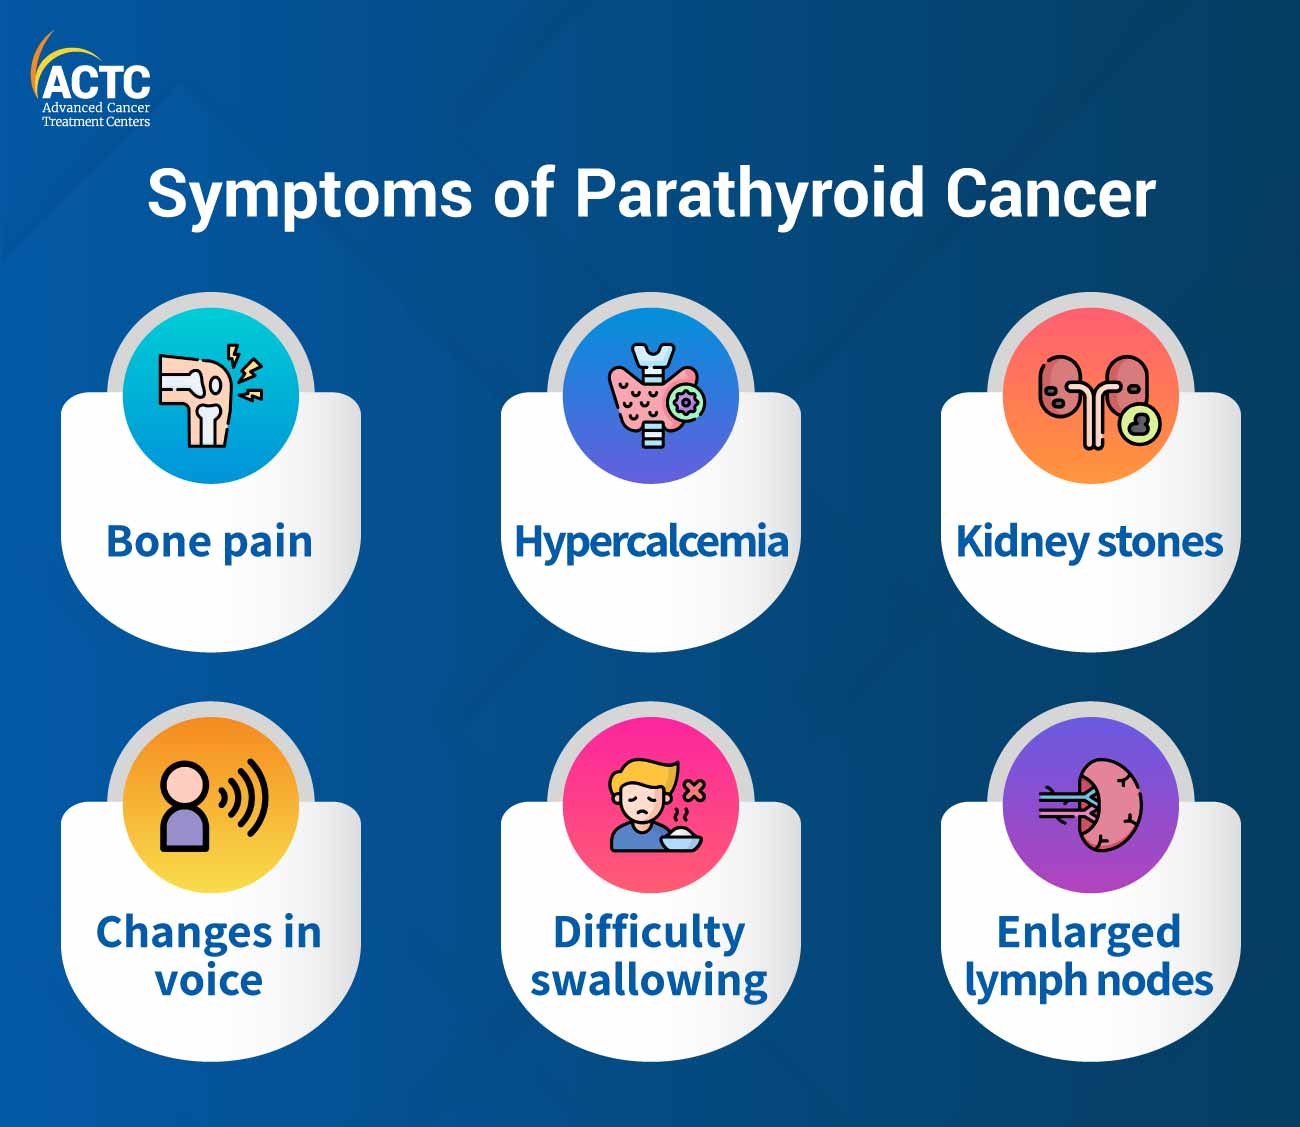 Symptoms of Parathyroid Cancer